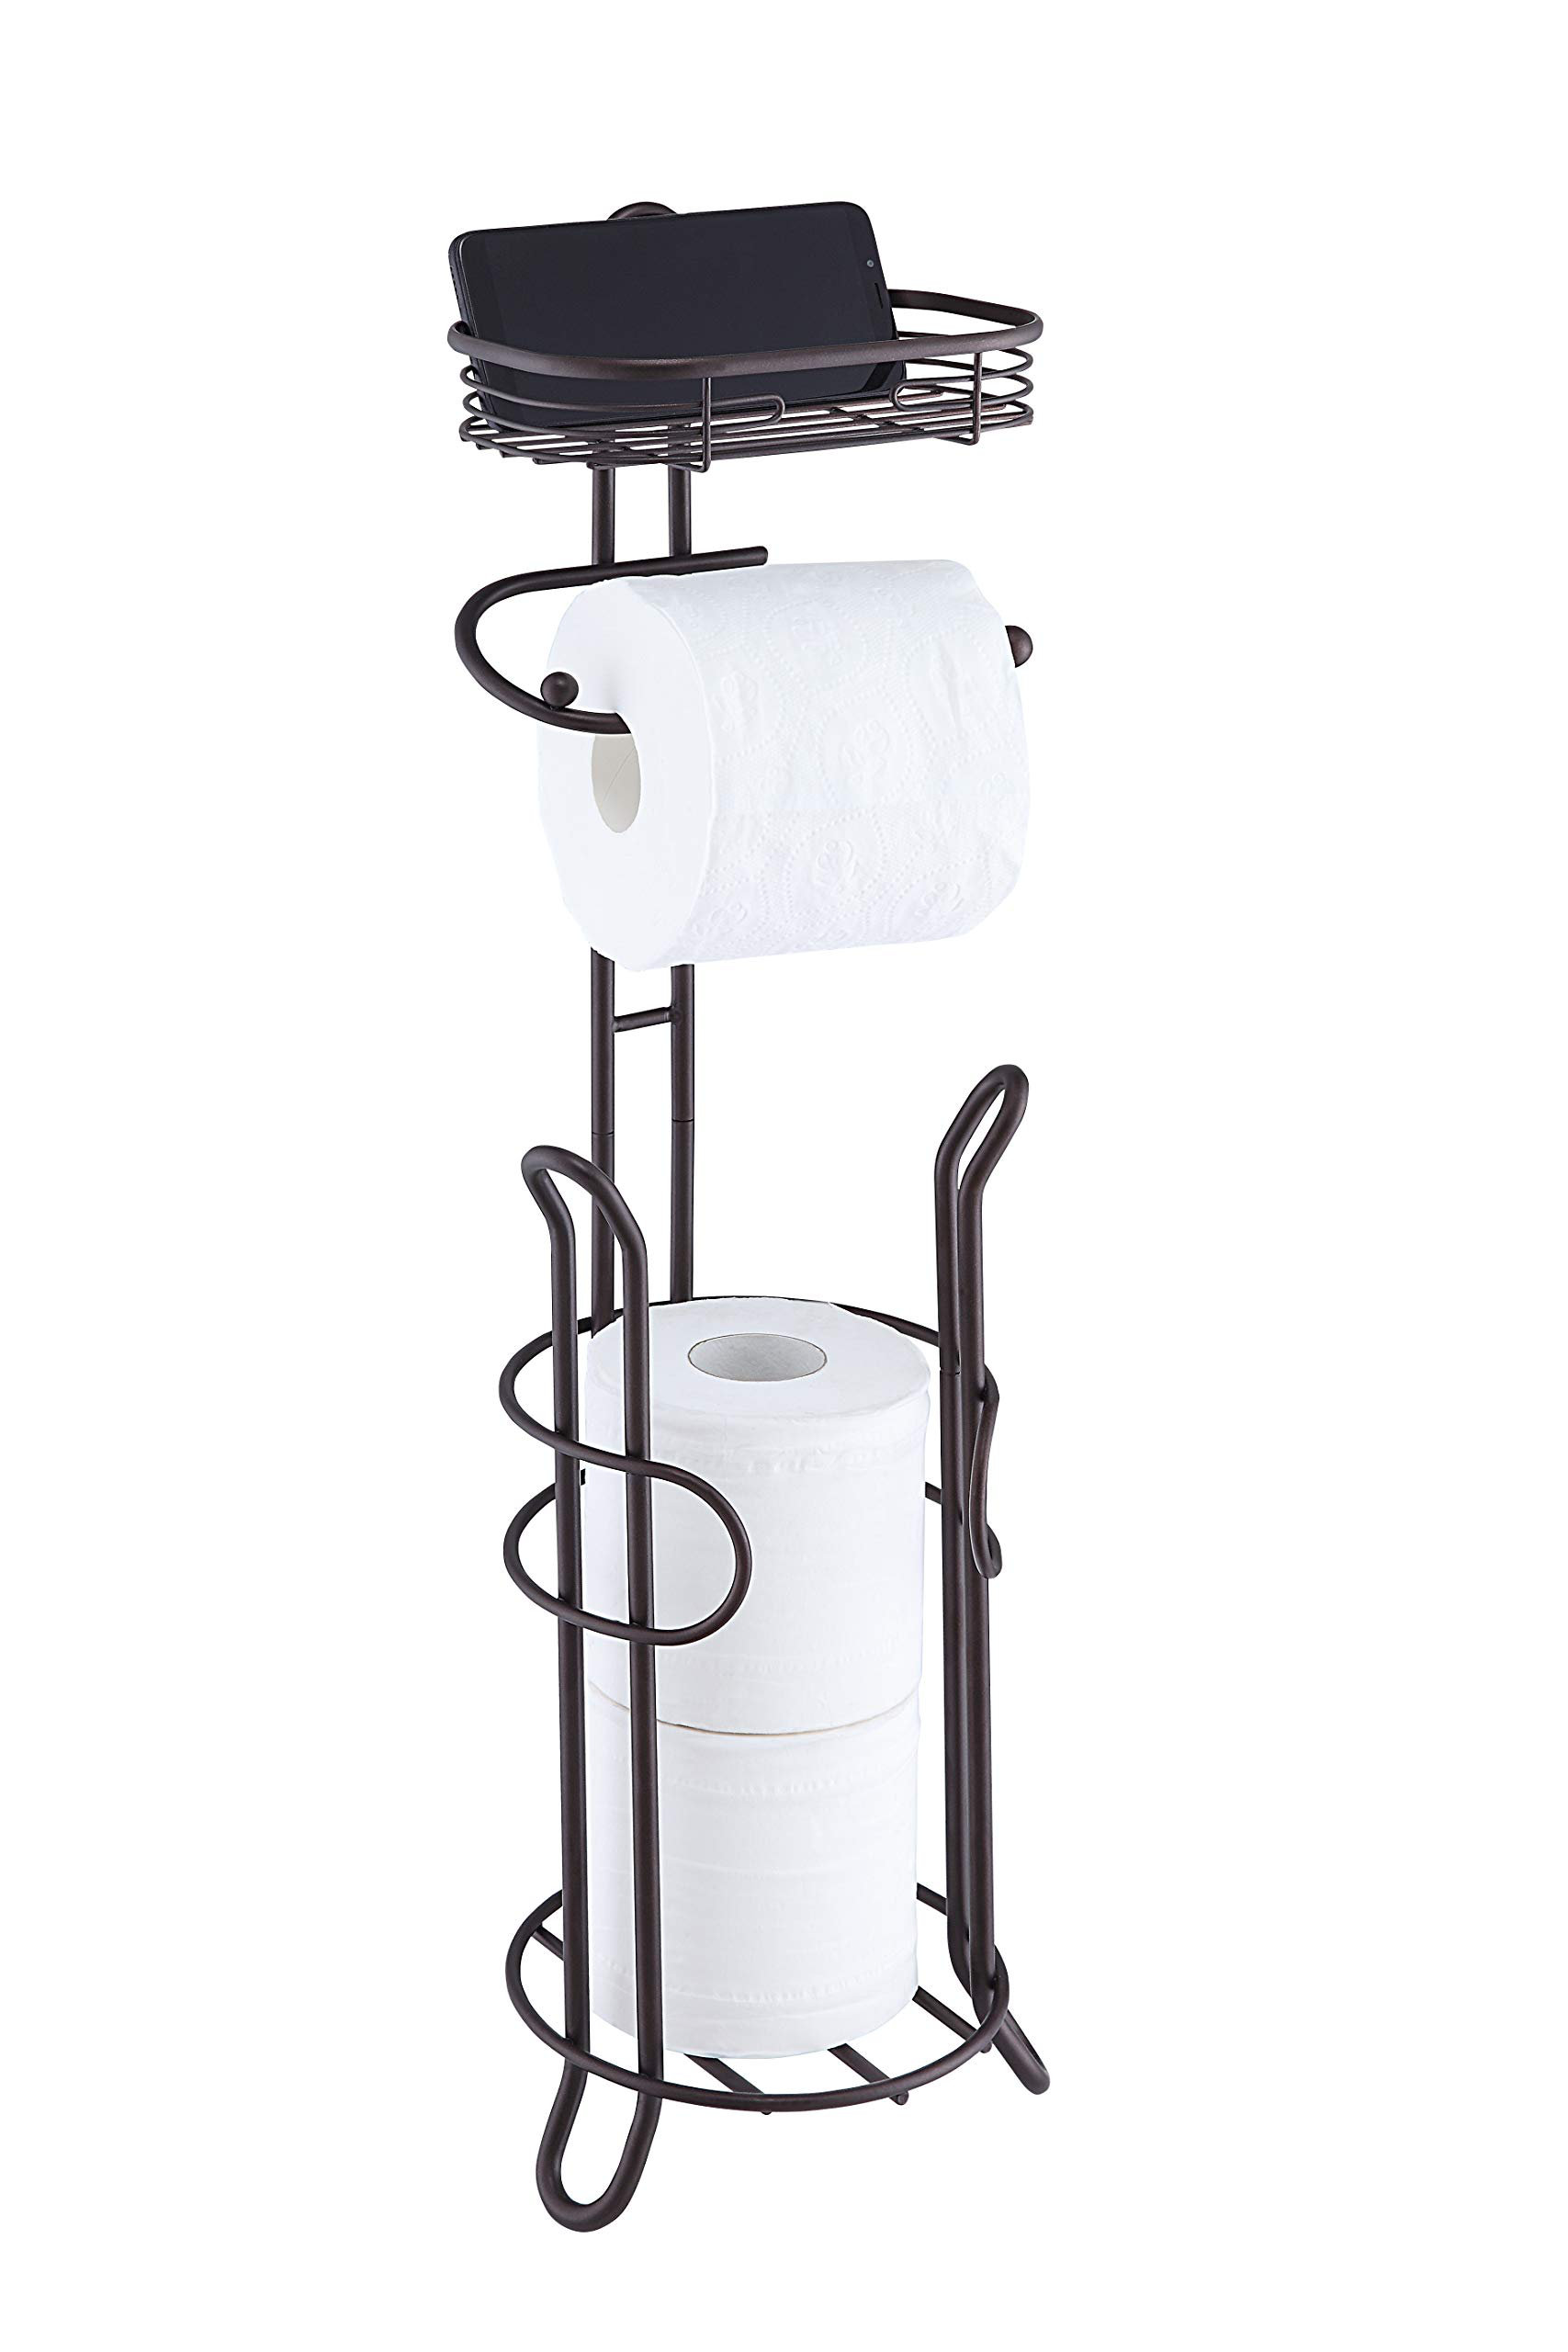 Yamazaki Home Modern Toilet Paper Holder Stand, Black or White on